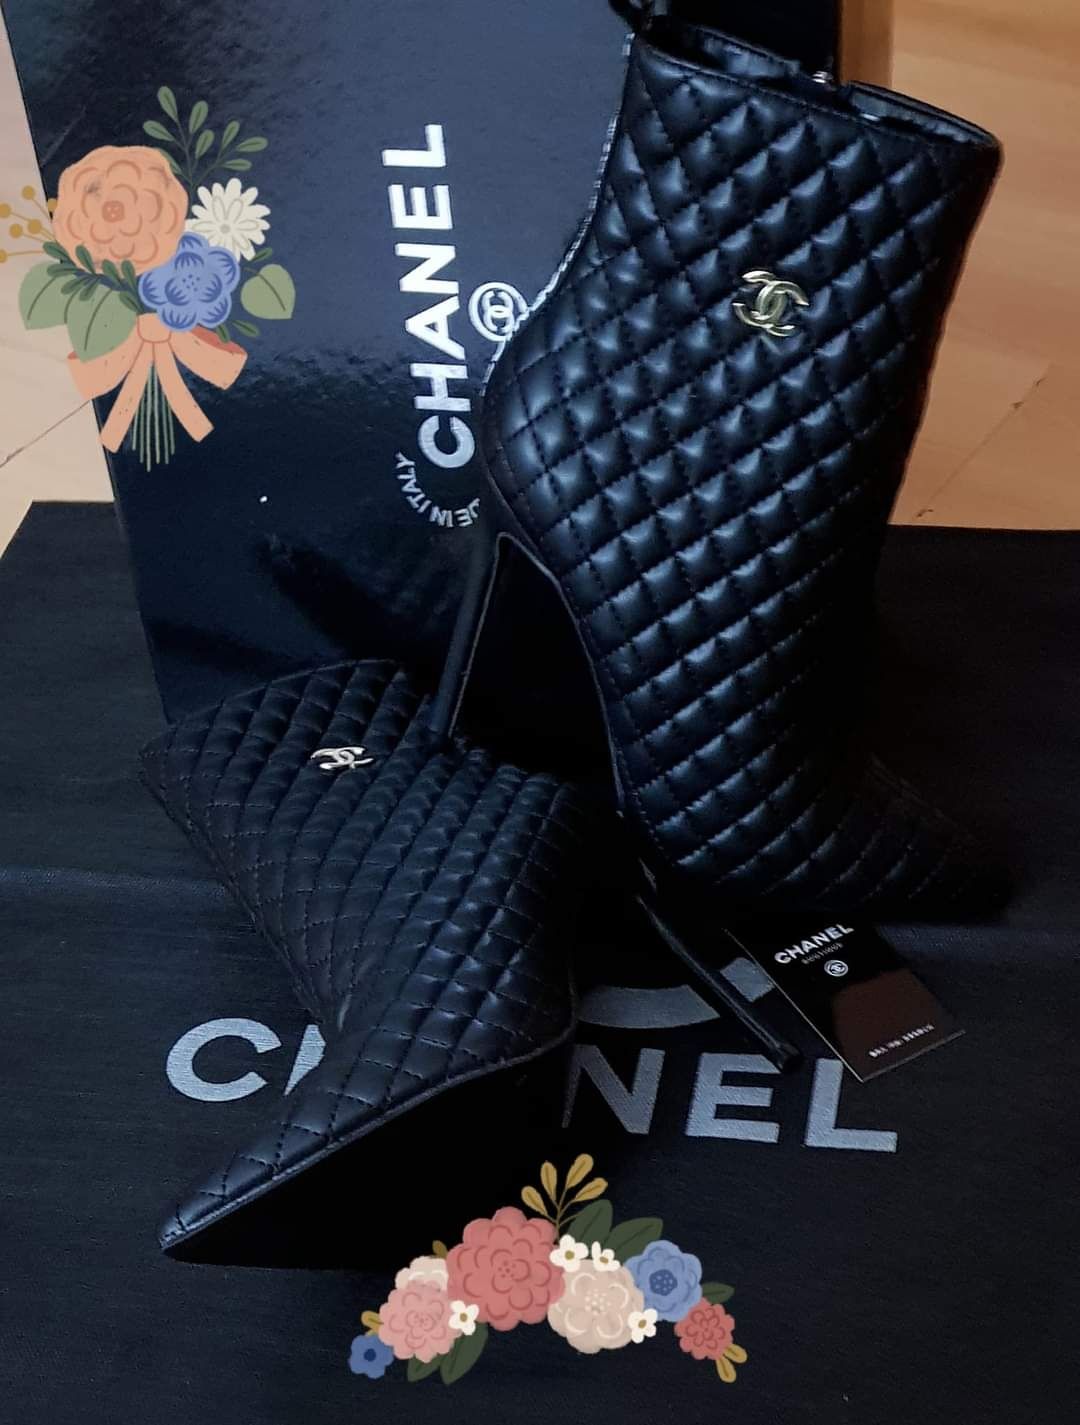 Botine Chanel new model import Franța logo metalic auriu, saculet